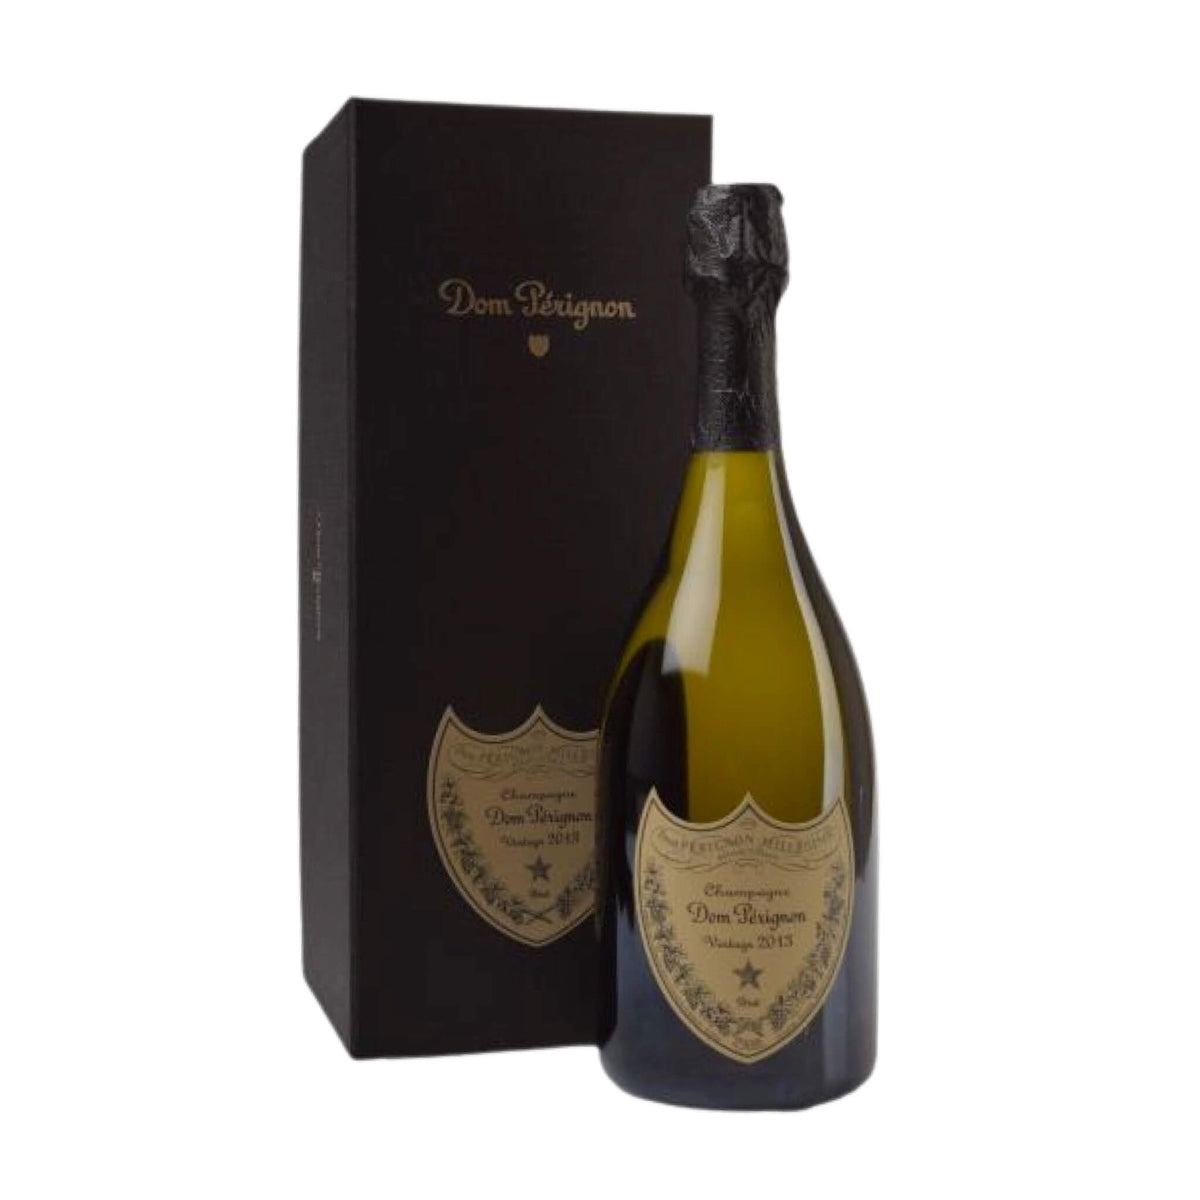 Dom Pérignon-Champagner-Chardonnay, Pinot Noir-2013 Vintage Champagne AOC-WINECOM